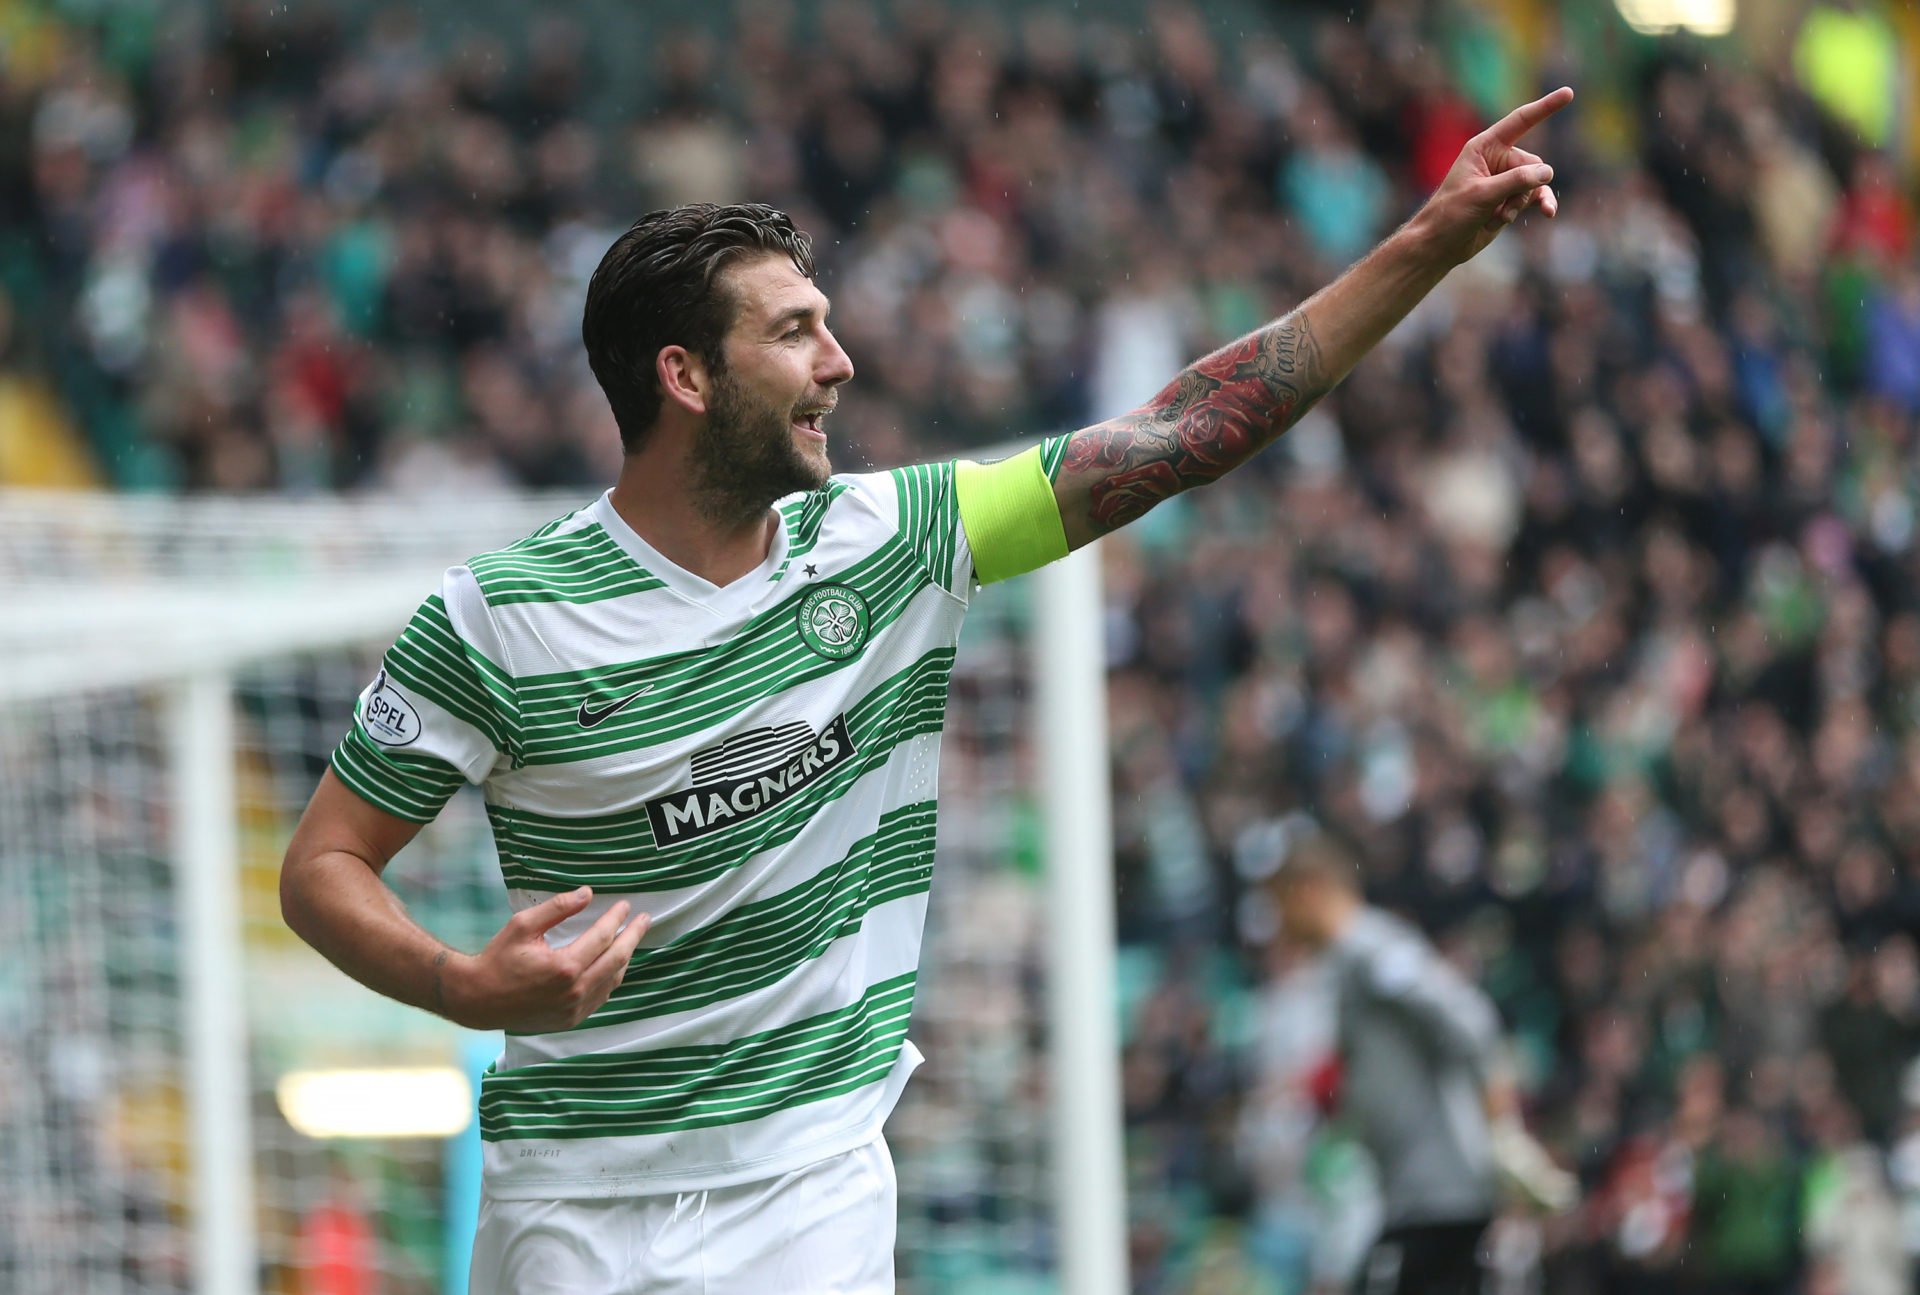 Charlie Mulgrew shares social media post after recent visit to Celtic training